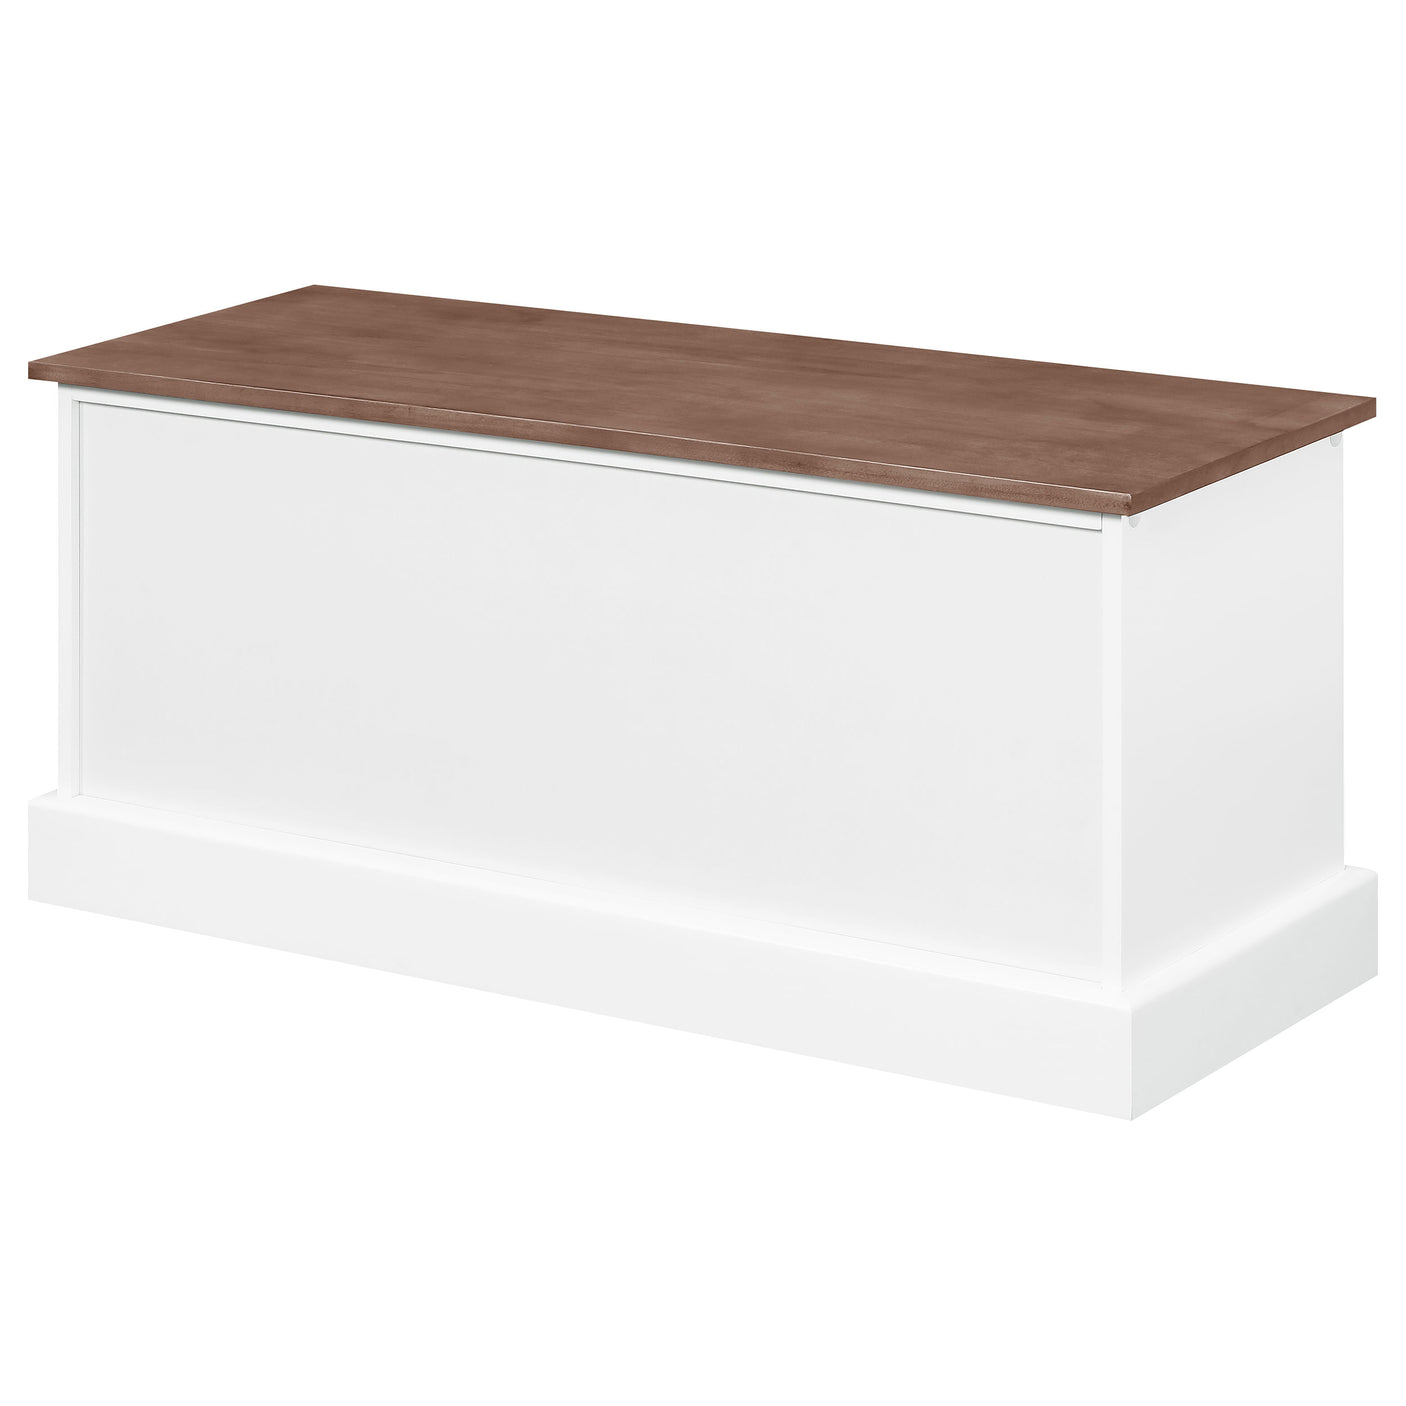 Storage Bench - Alma 3-drawer Storage Bench Weathered Brown and White